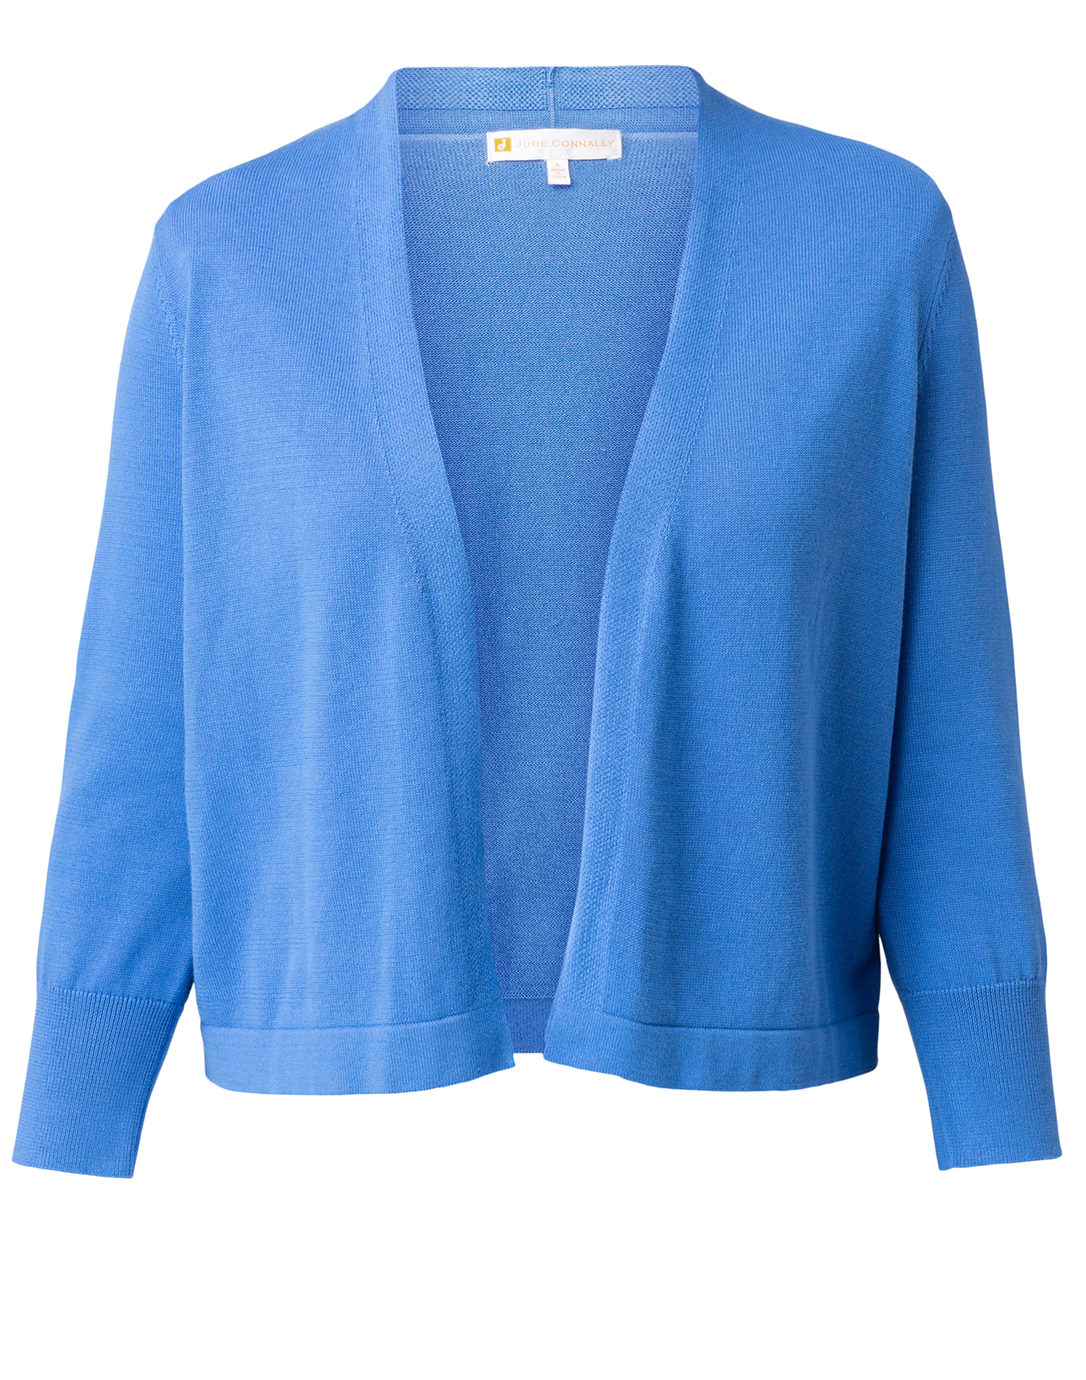 Priscilla Periwinkle Blue Cropped Cotton Cardigan | Jude Connally ...